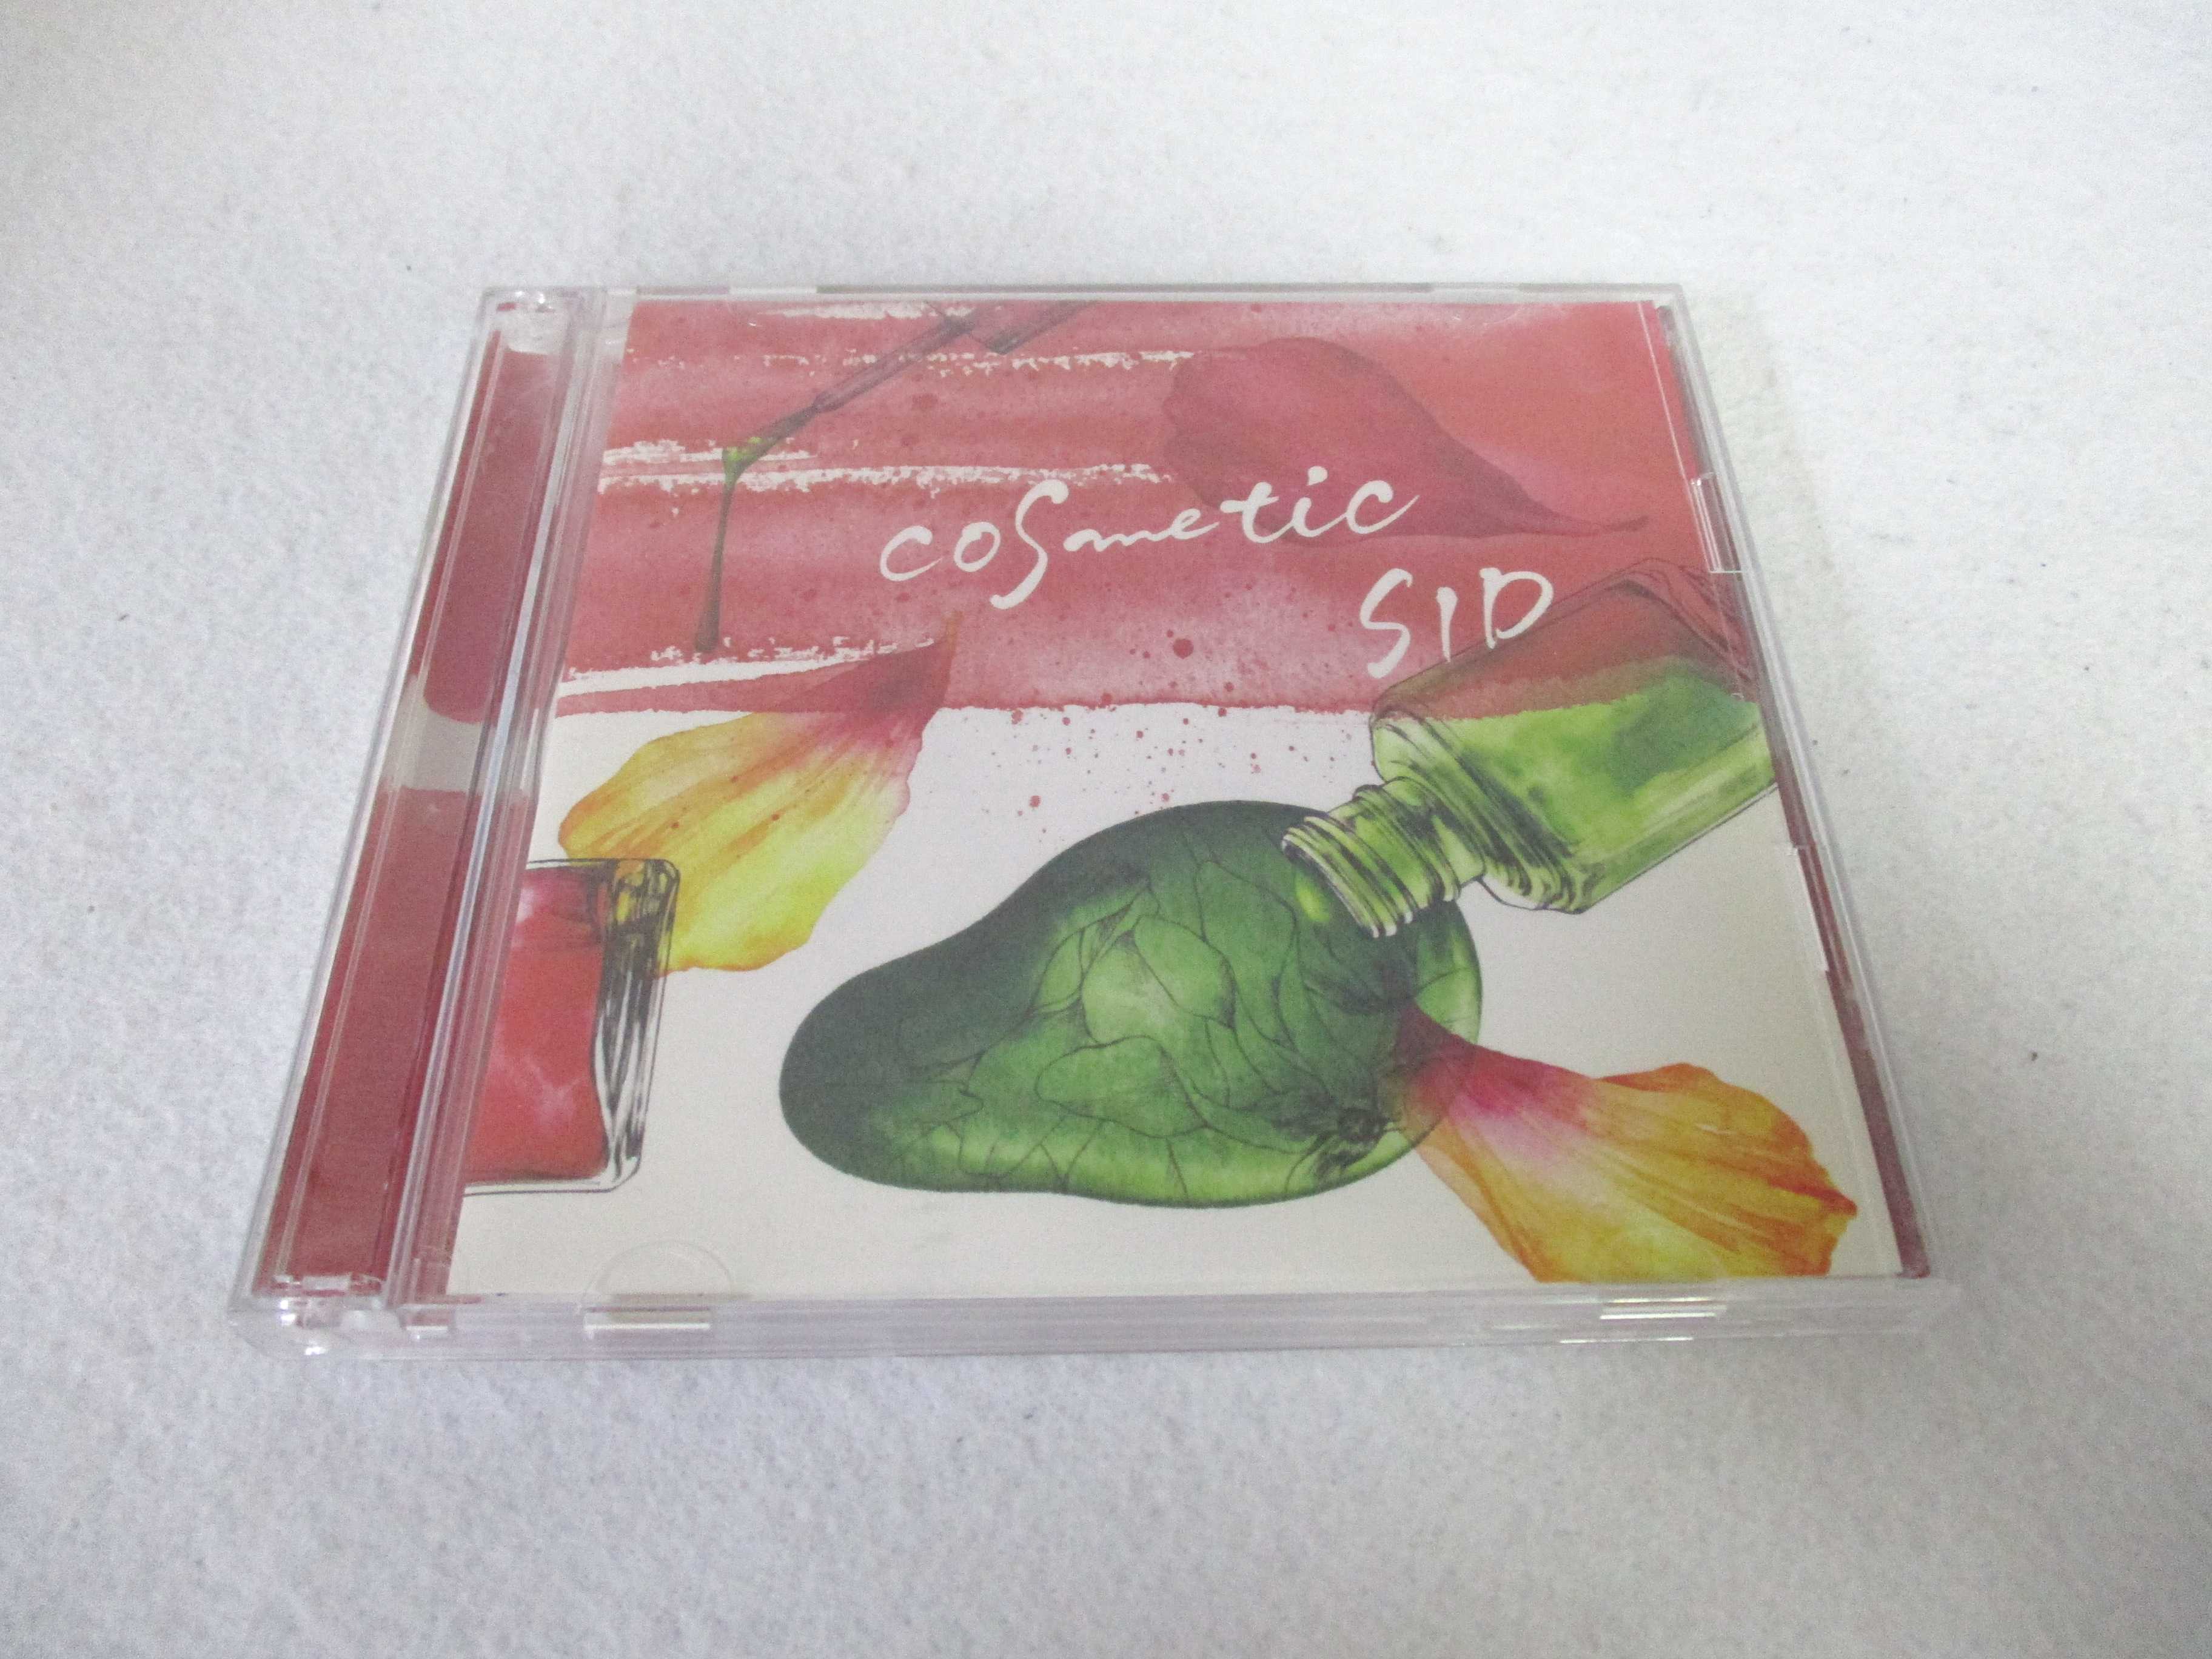 AC06067 【中古】 【CD】 cosmetic/シド